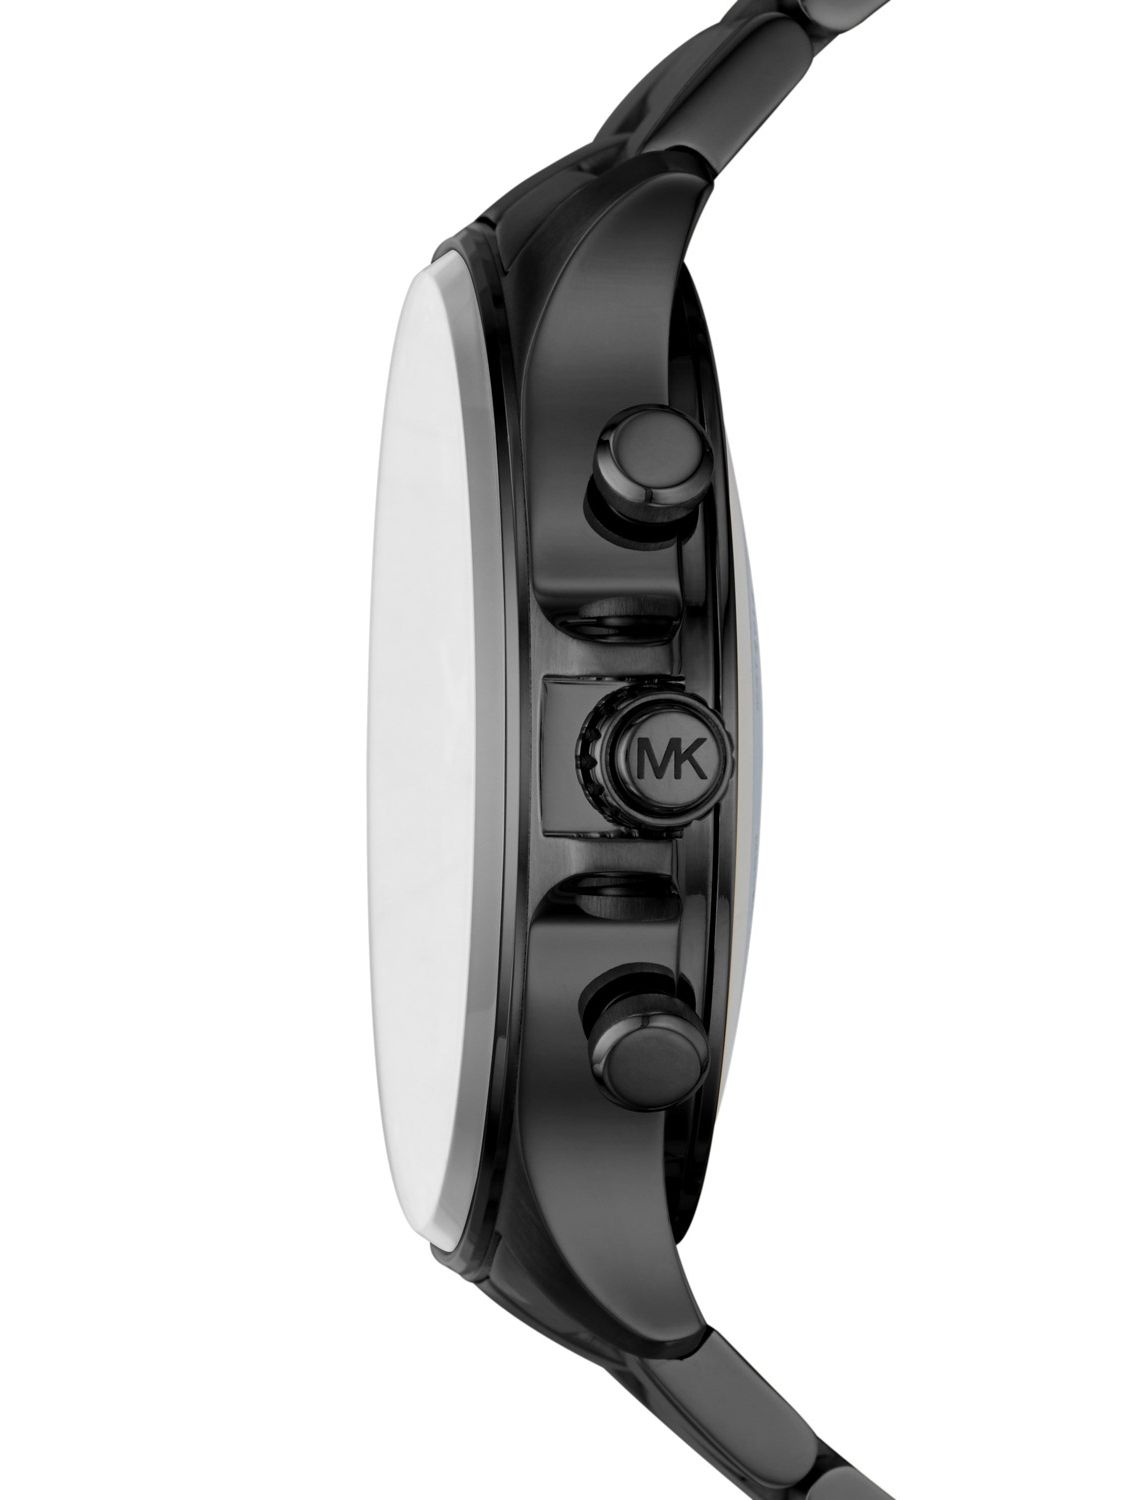 michael kors black hybrid reid watch